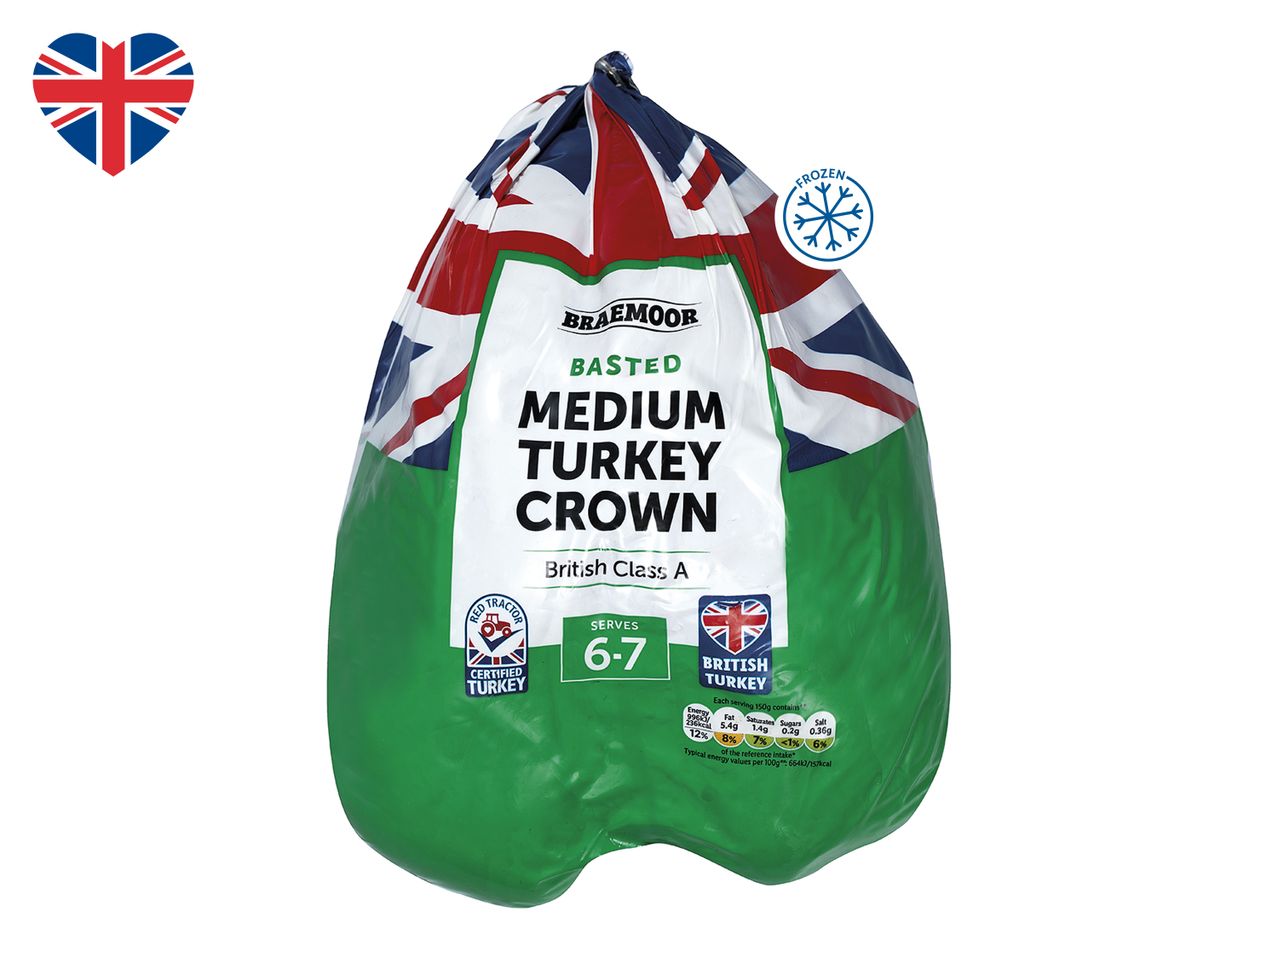 Go to full screen view: Braemoor British Medium Turkey Crown - Image 1